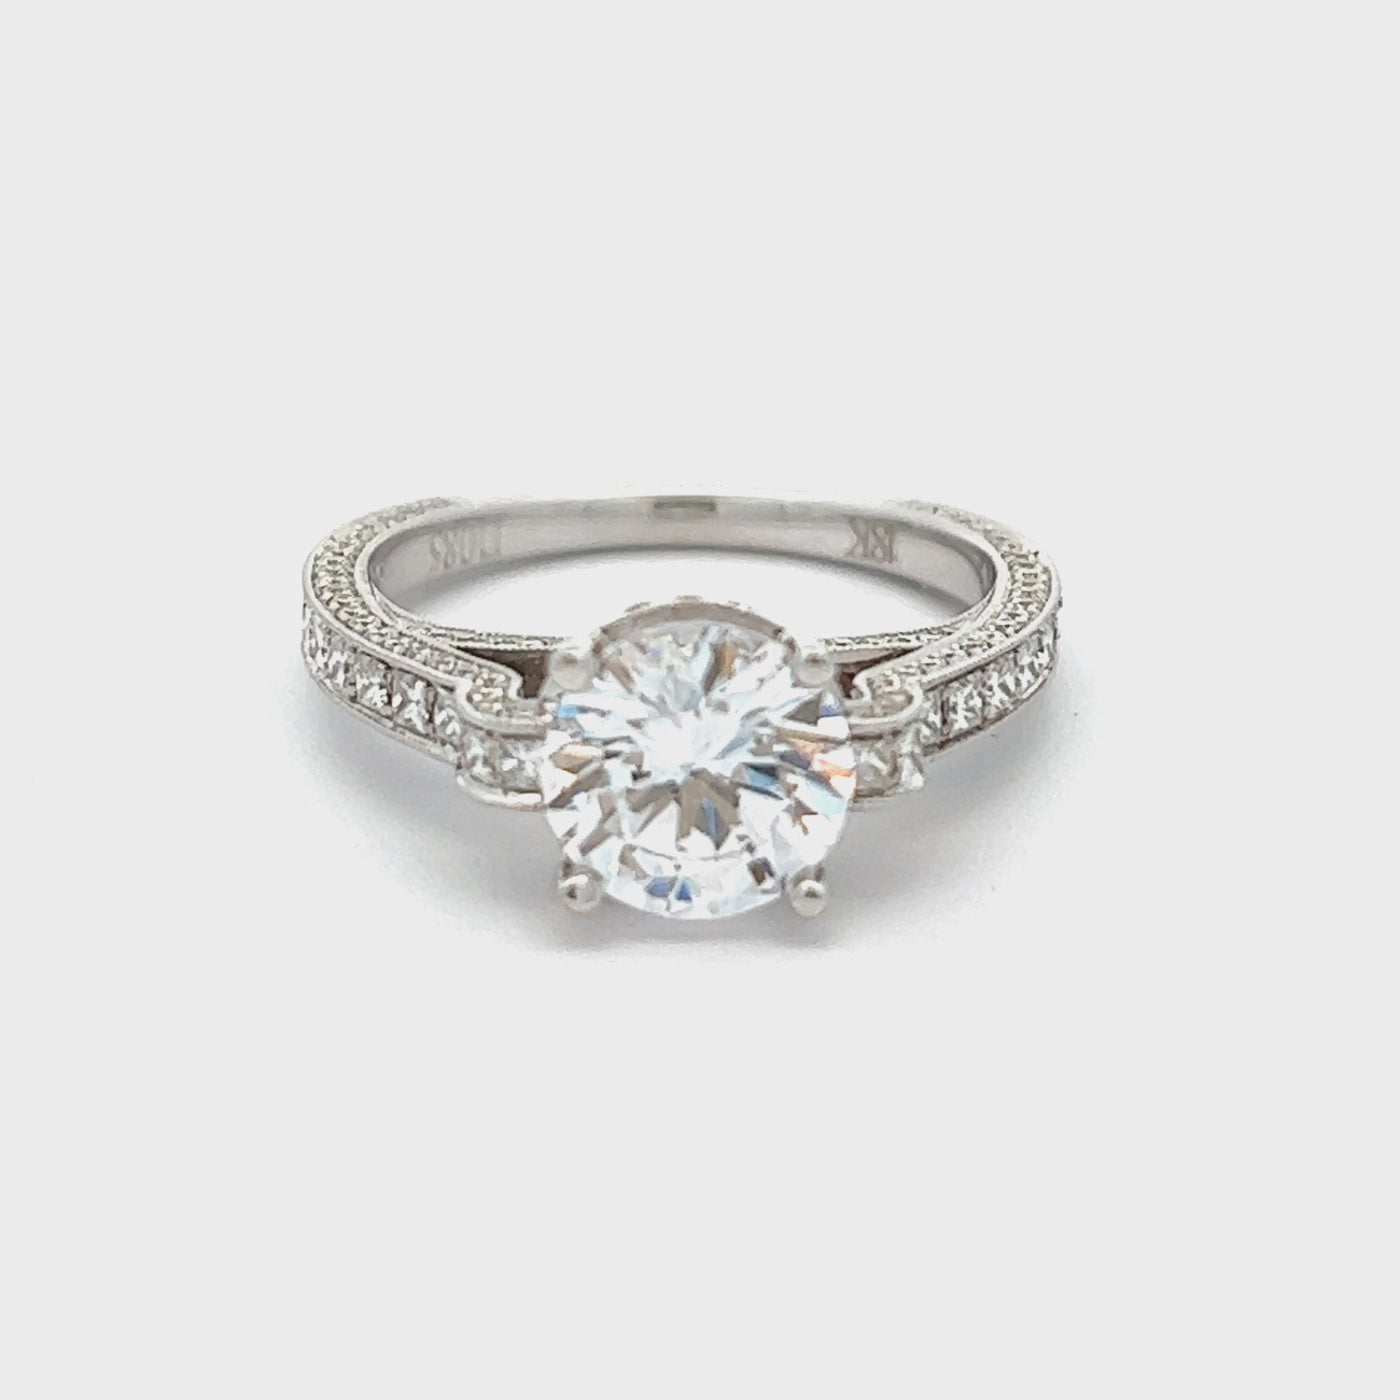 18k White Gold Round Diamond Hidden Halo Engagement Ring Setting ().44ctw)